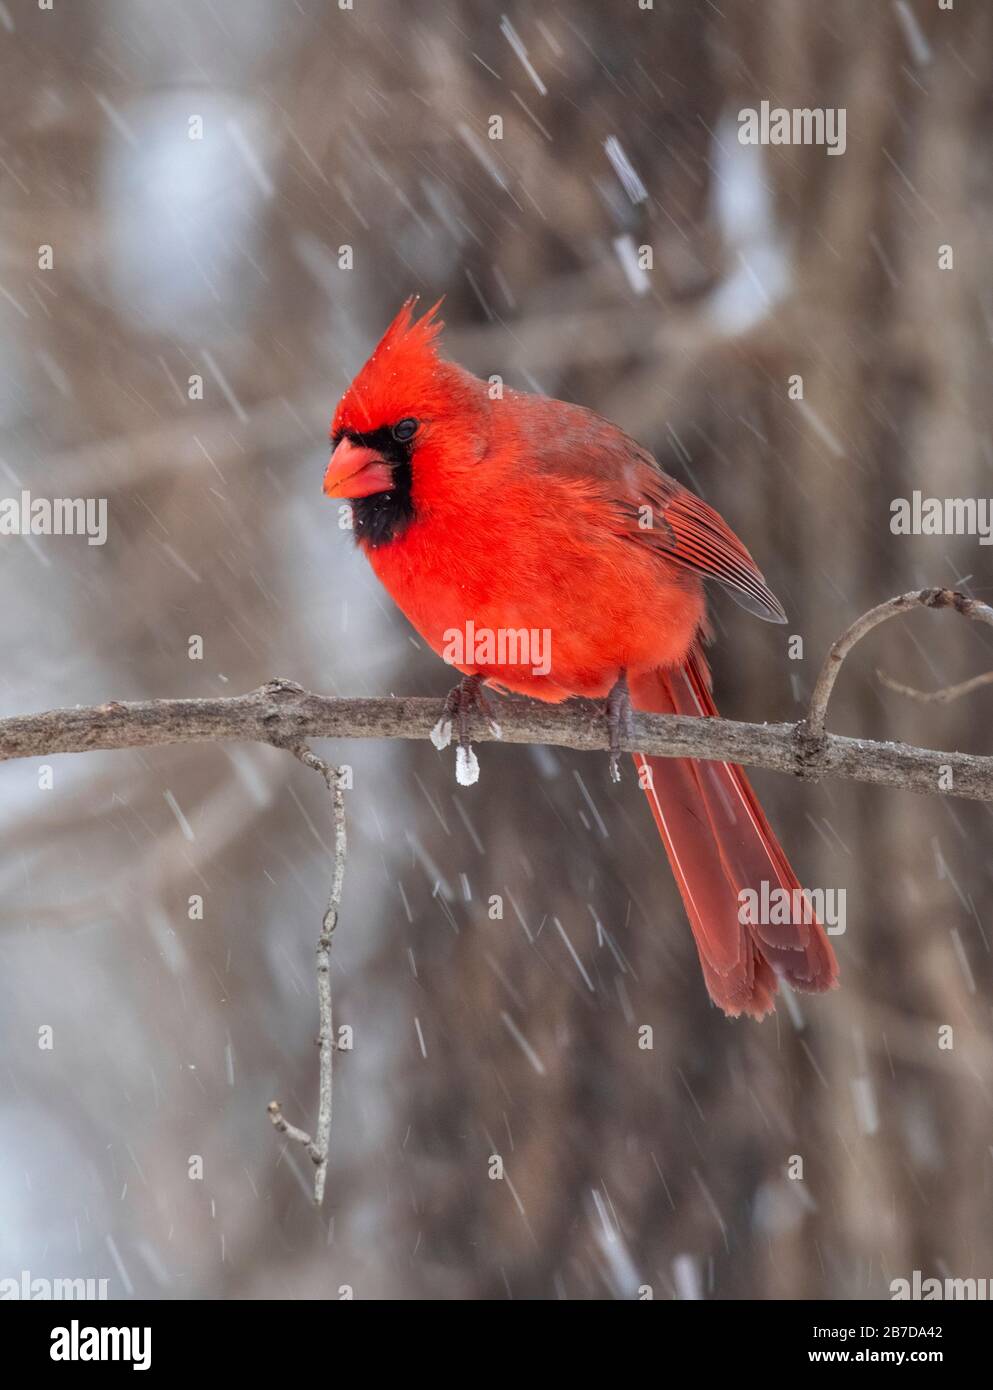 Cardinal du nord (cardinalis cardinalis) mâle sous neige, Iowa, États-Unis. Banque D'Images